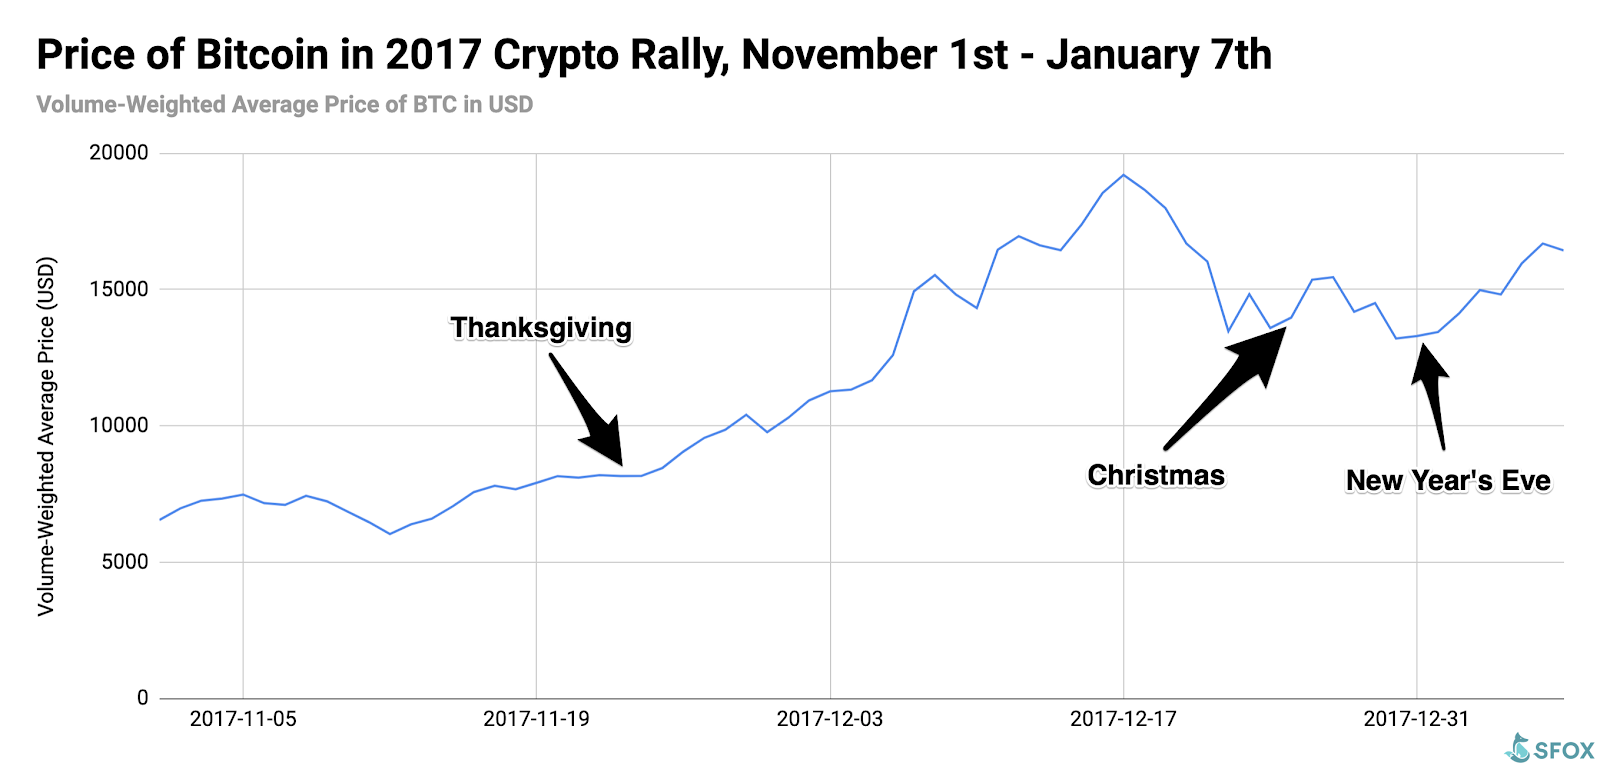 Bitcoin price during the holiday season and winter bull run 2017